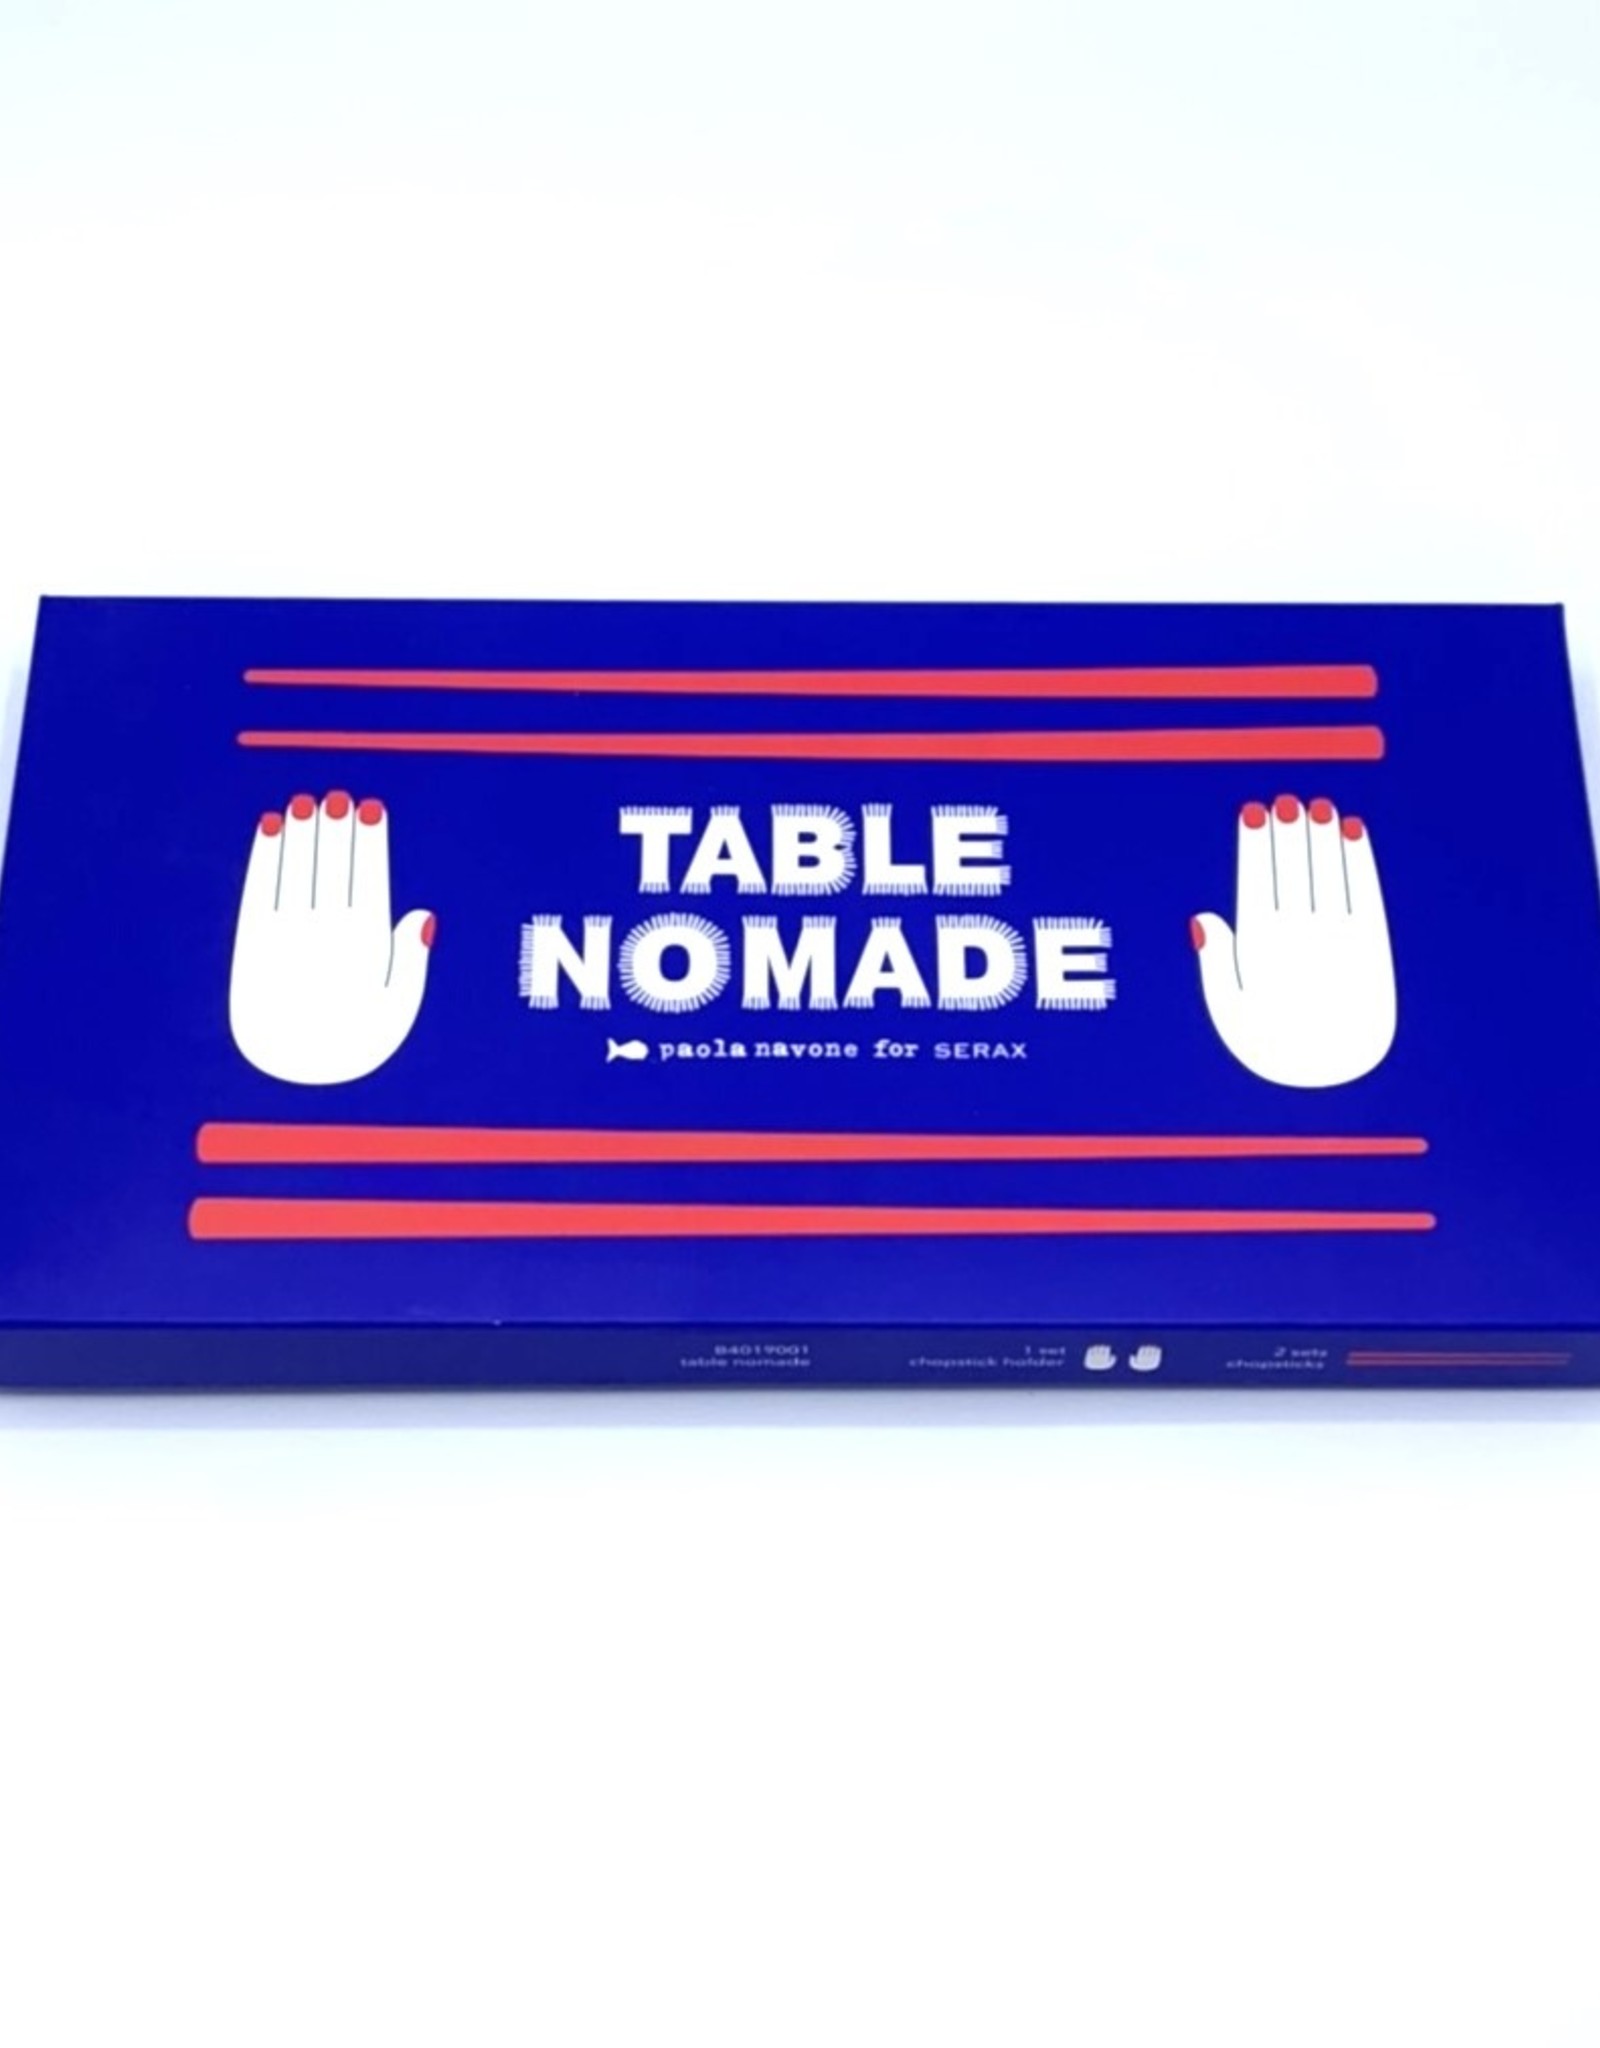 Houders + eetstokjes Table Nomade - Paola Navone